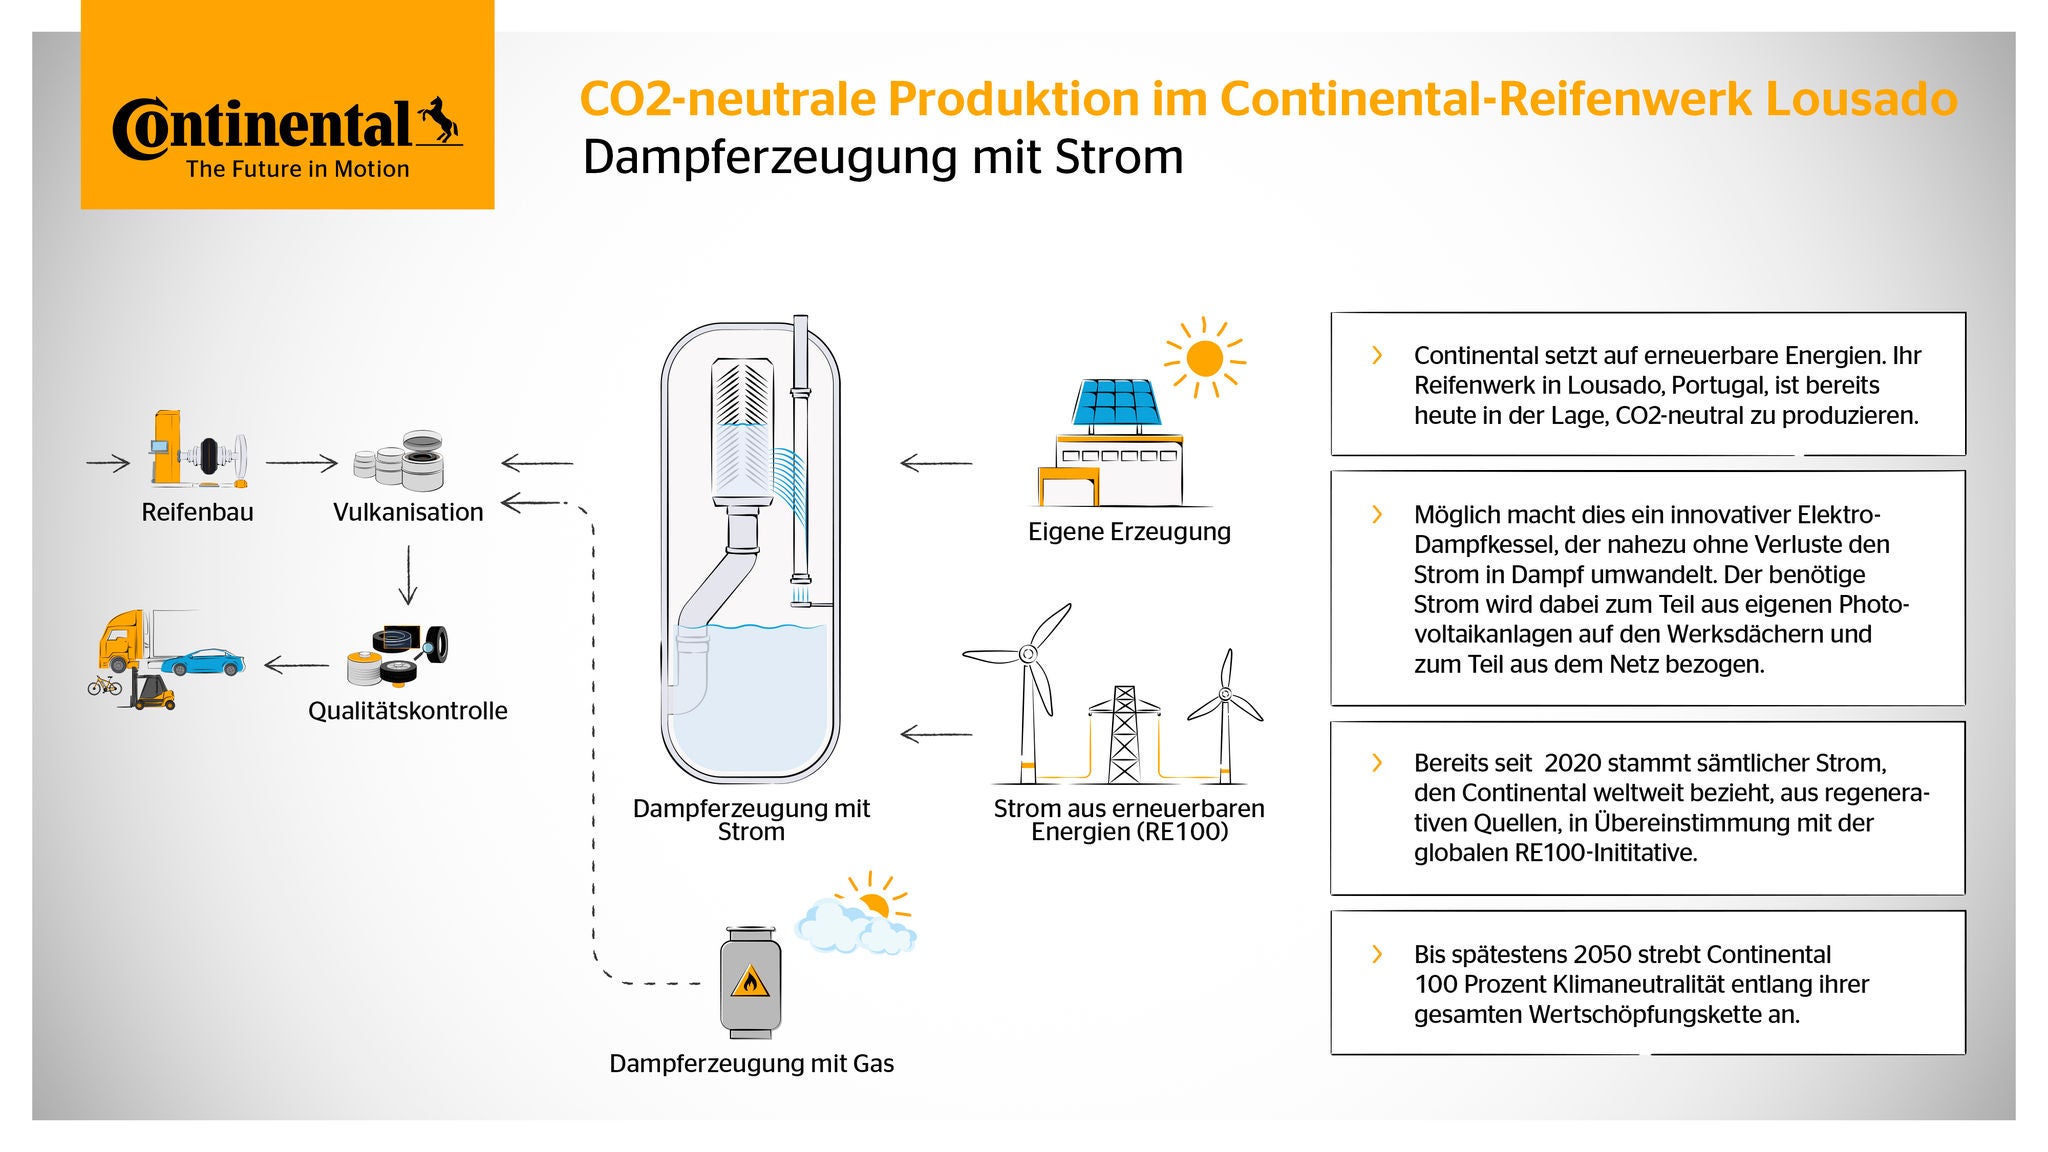 Co2-neutrale Produktion im Continental-Reifenwerk Lousado